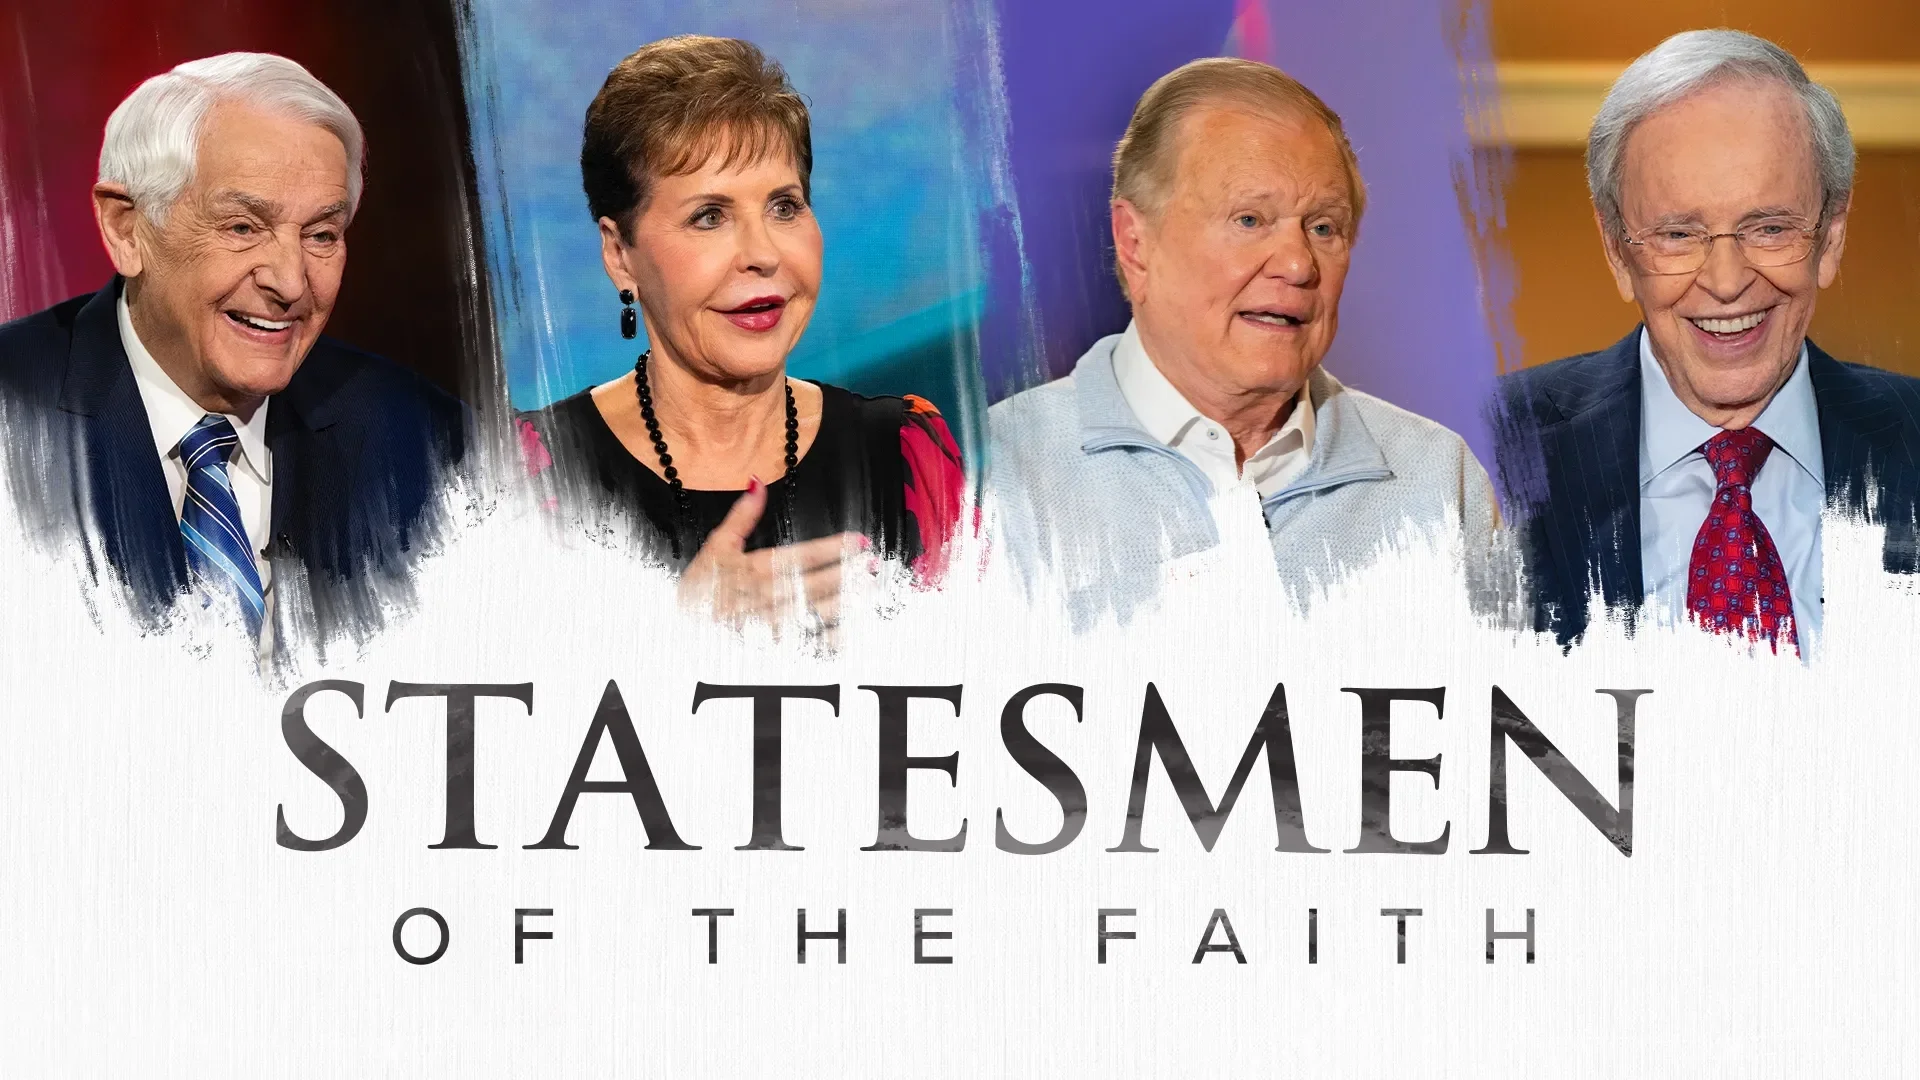 Statesmen of the Faith